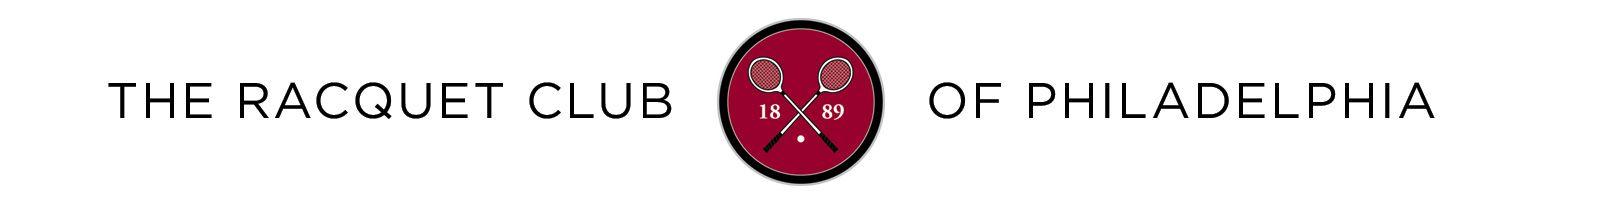 Philadelphia Logo - The Racquet Club of Philadelphia